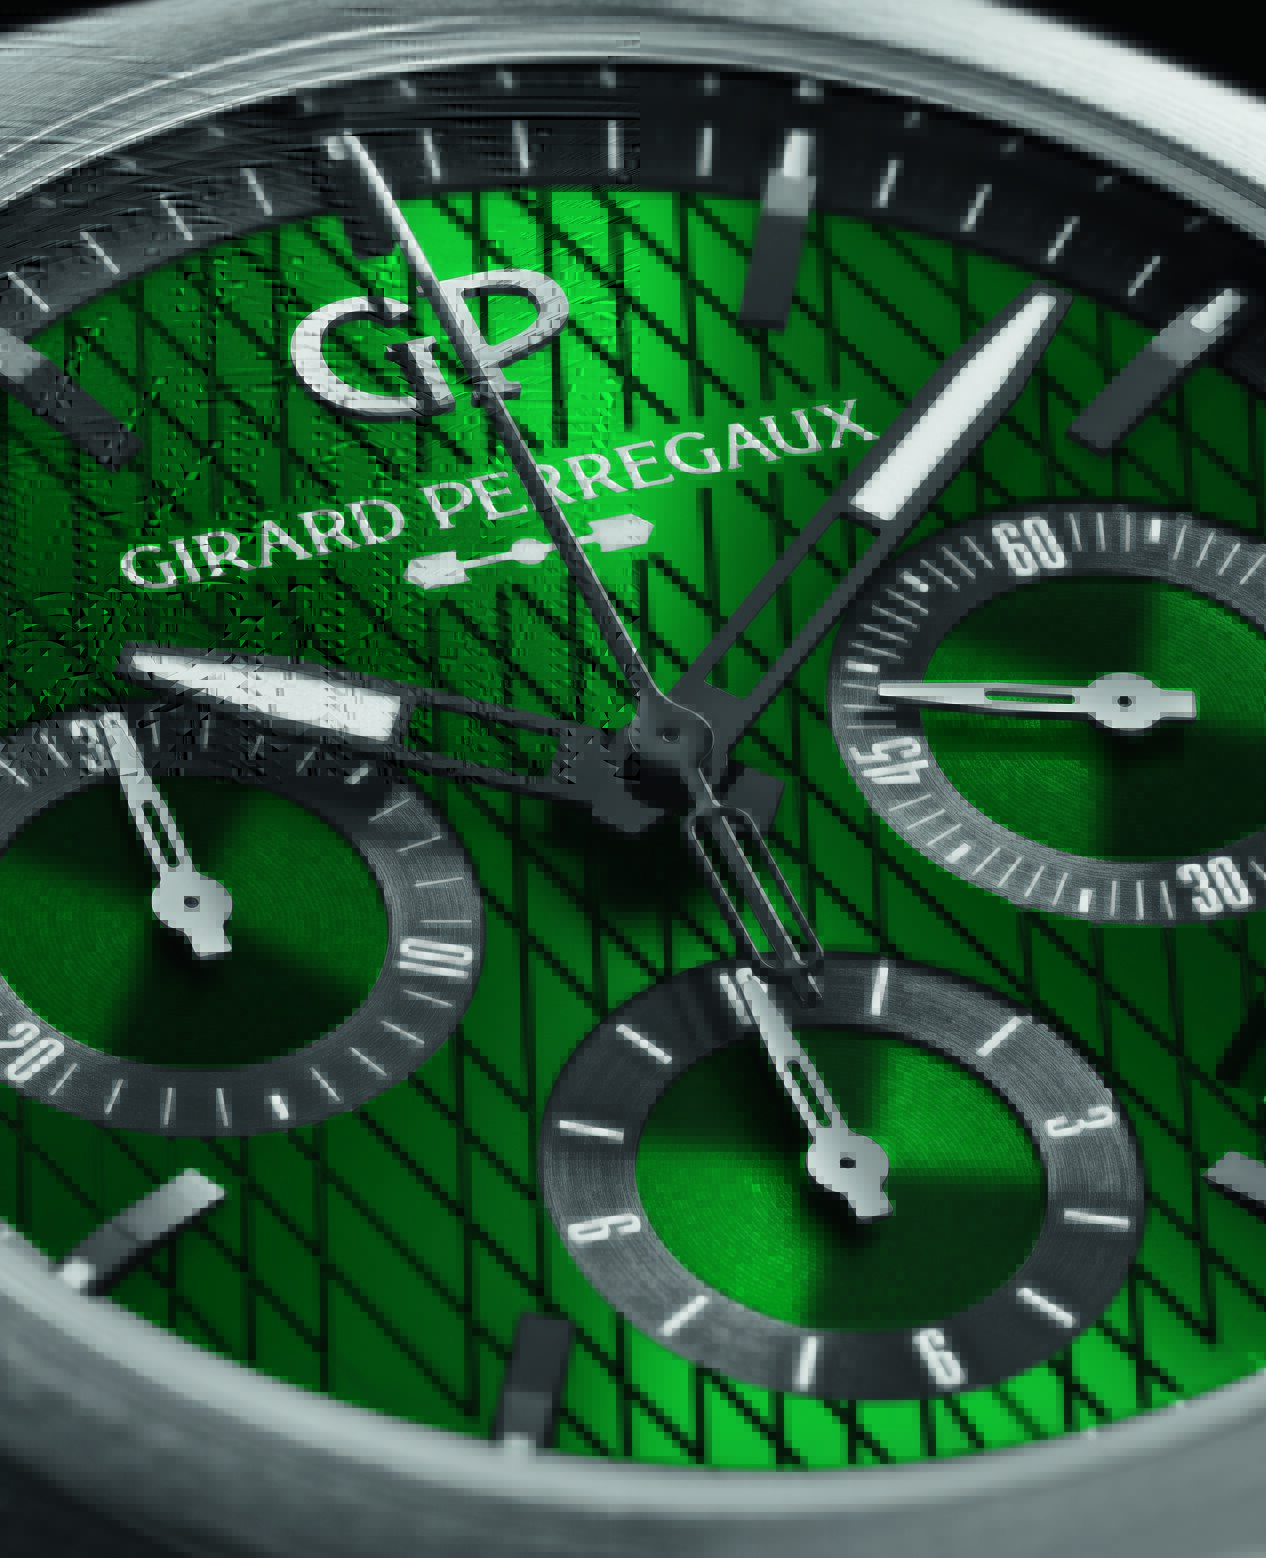 INTRODUCING: The Girard Perregaux Aston Martin Laureato Chronograph has a dial that dazzles